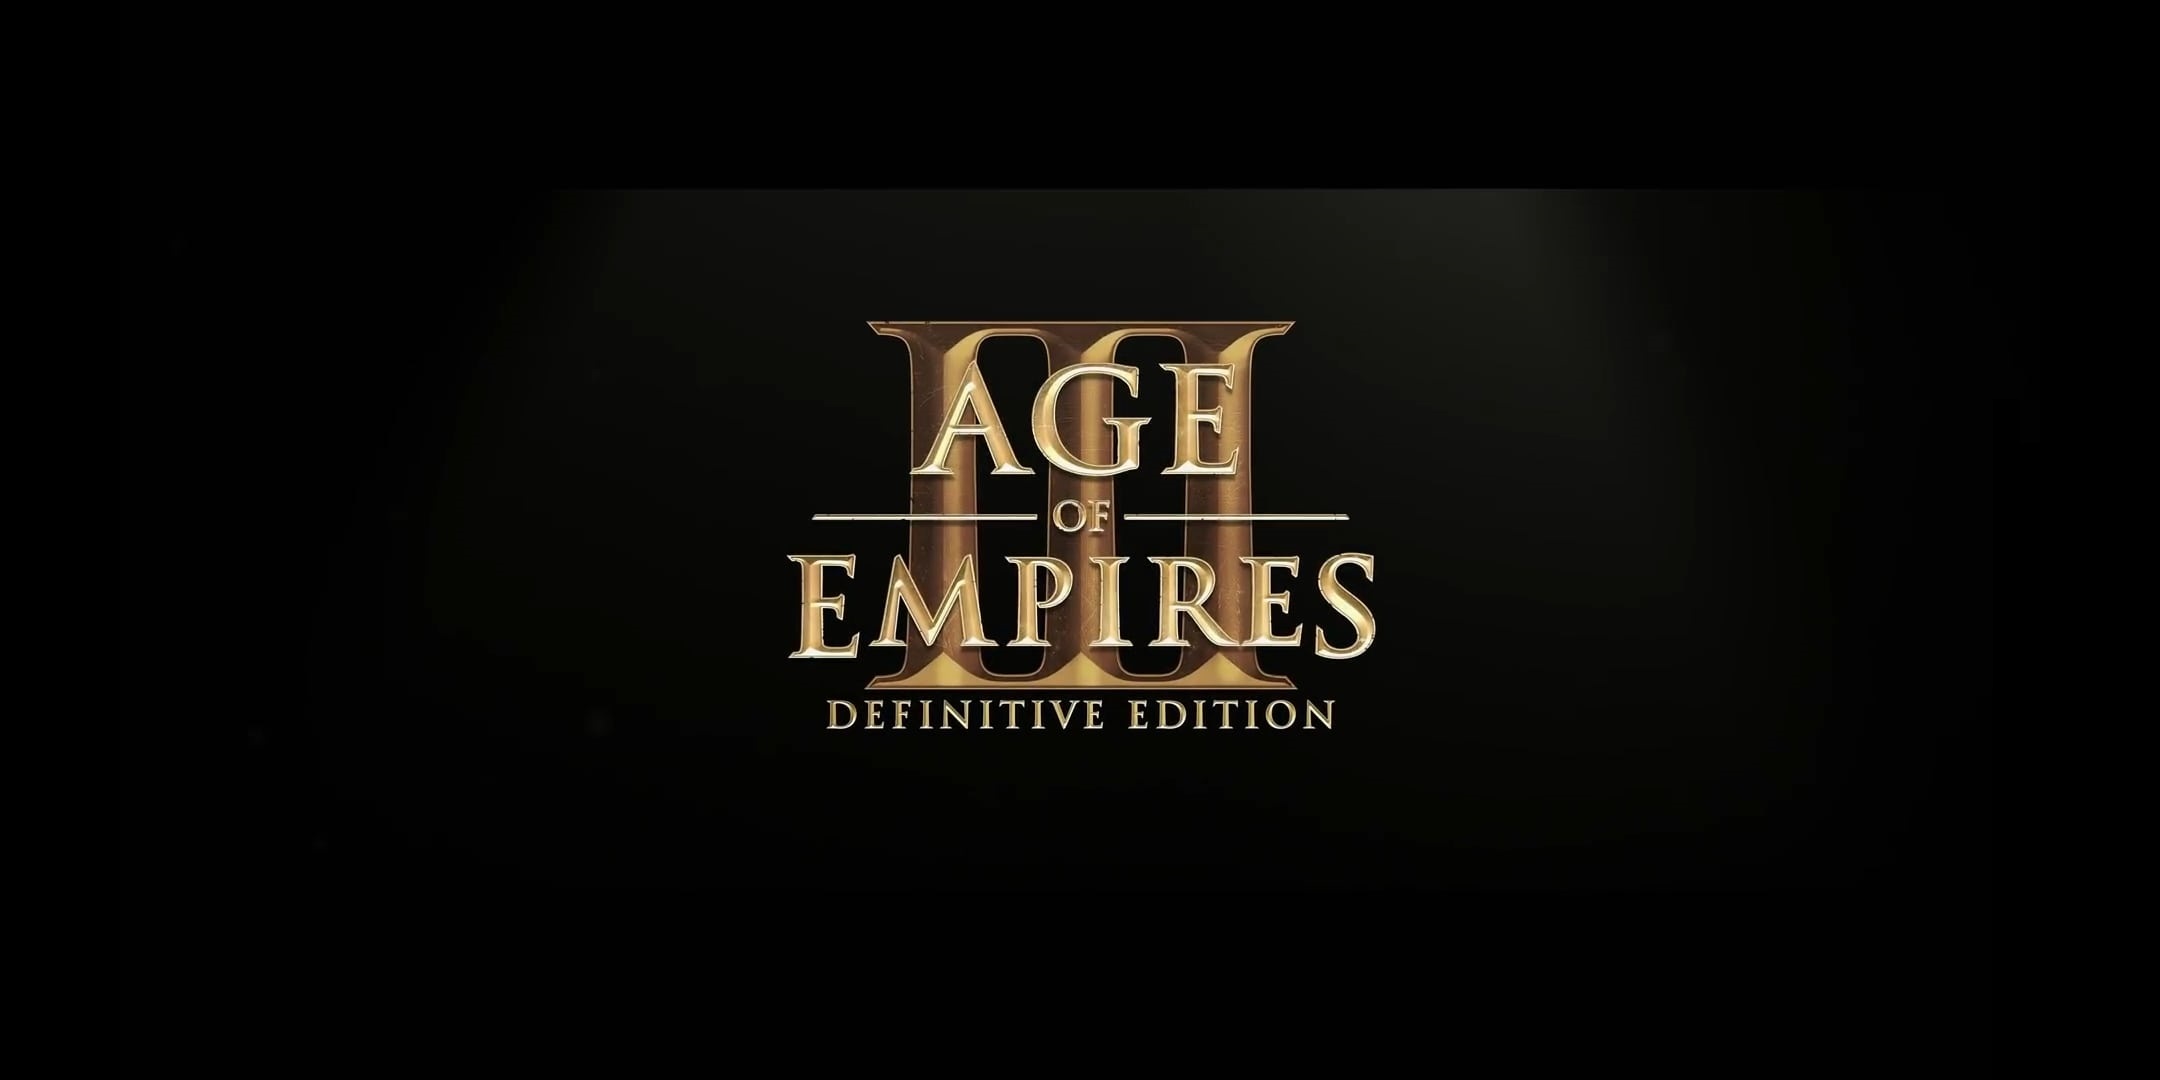 Age of Empires 3 Definitive Edition uscita vicina?